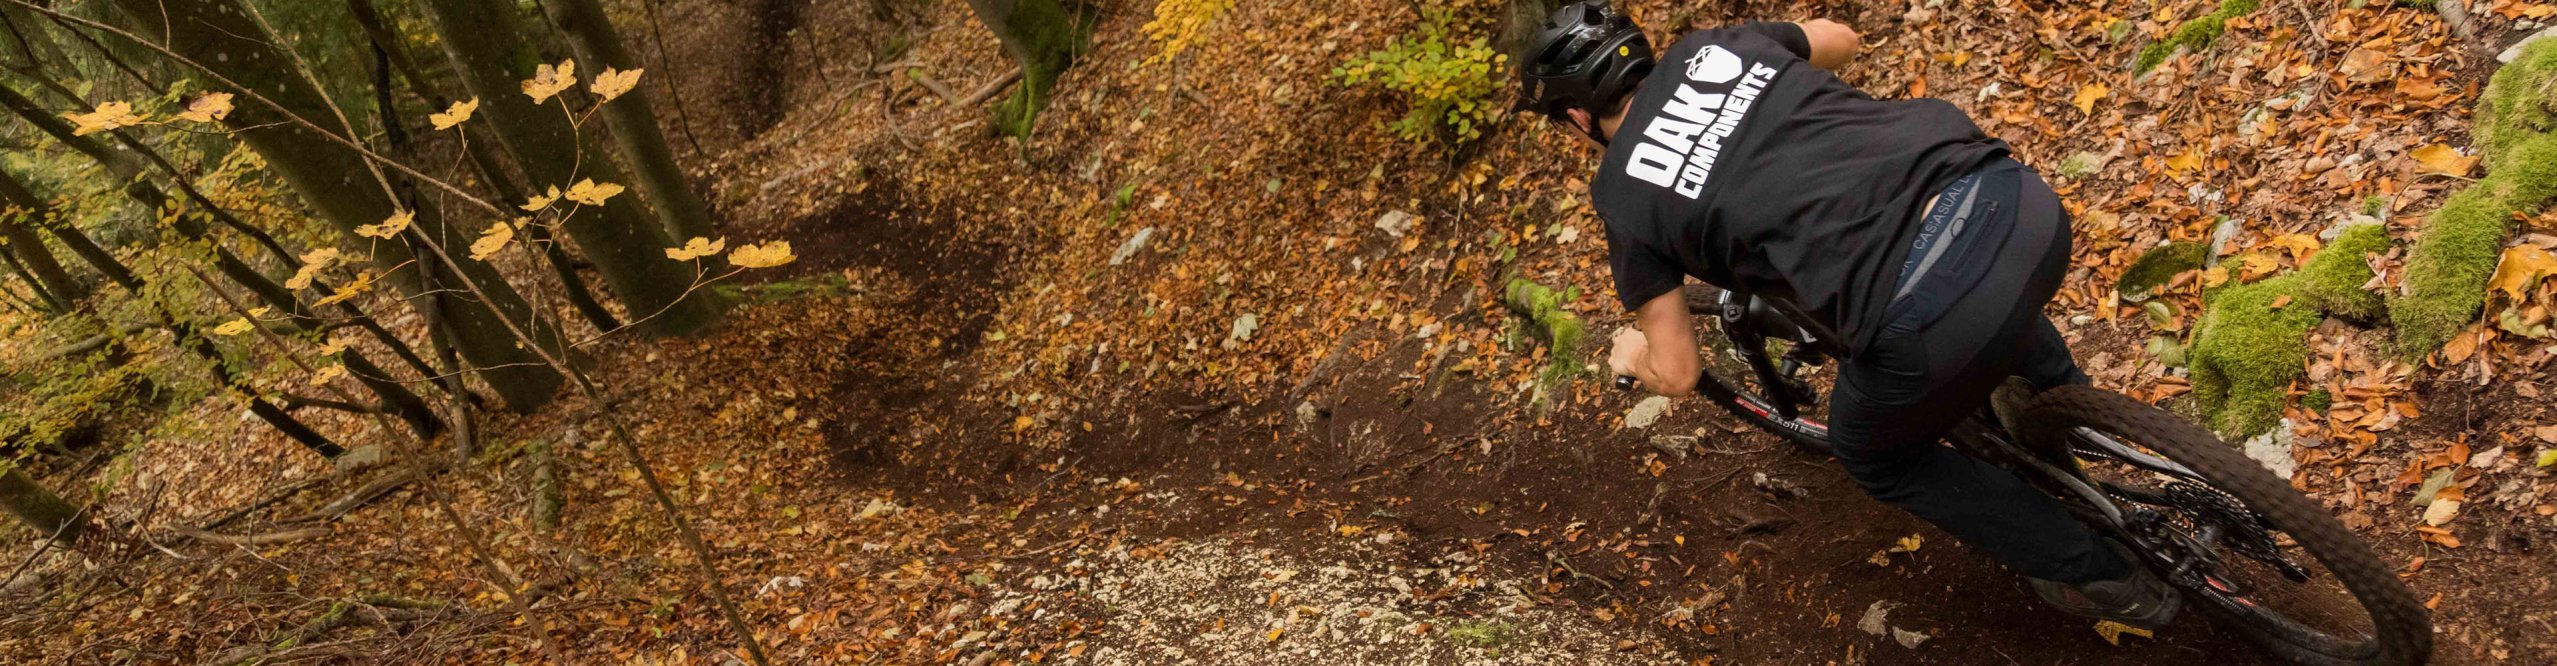 Mountainbiker fährt einen kurvigen Trail durch den Wald